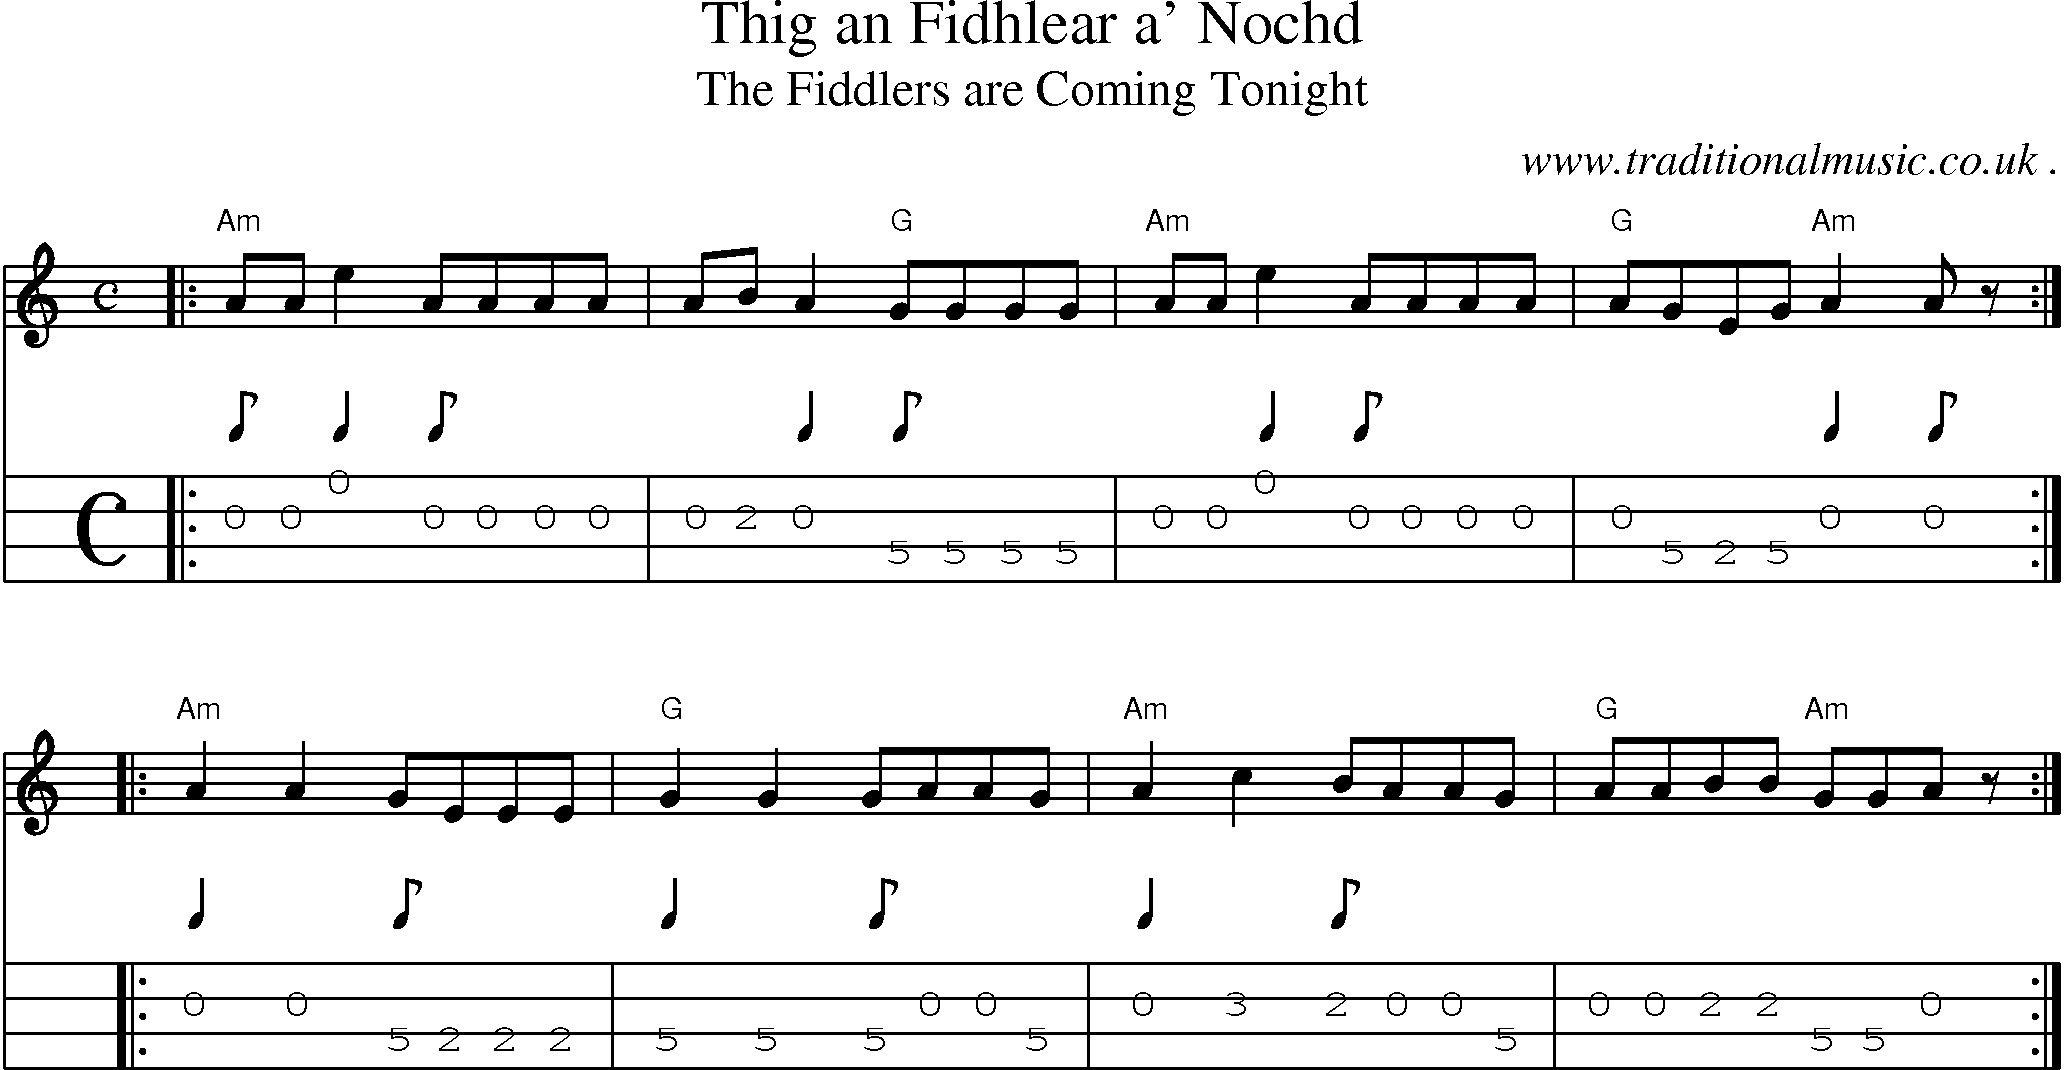 Sheet-music  score, Chords and Mandolin Tabs for Thig An Fidhlear A Nochd